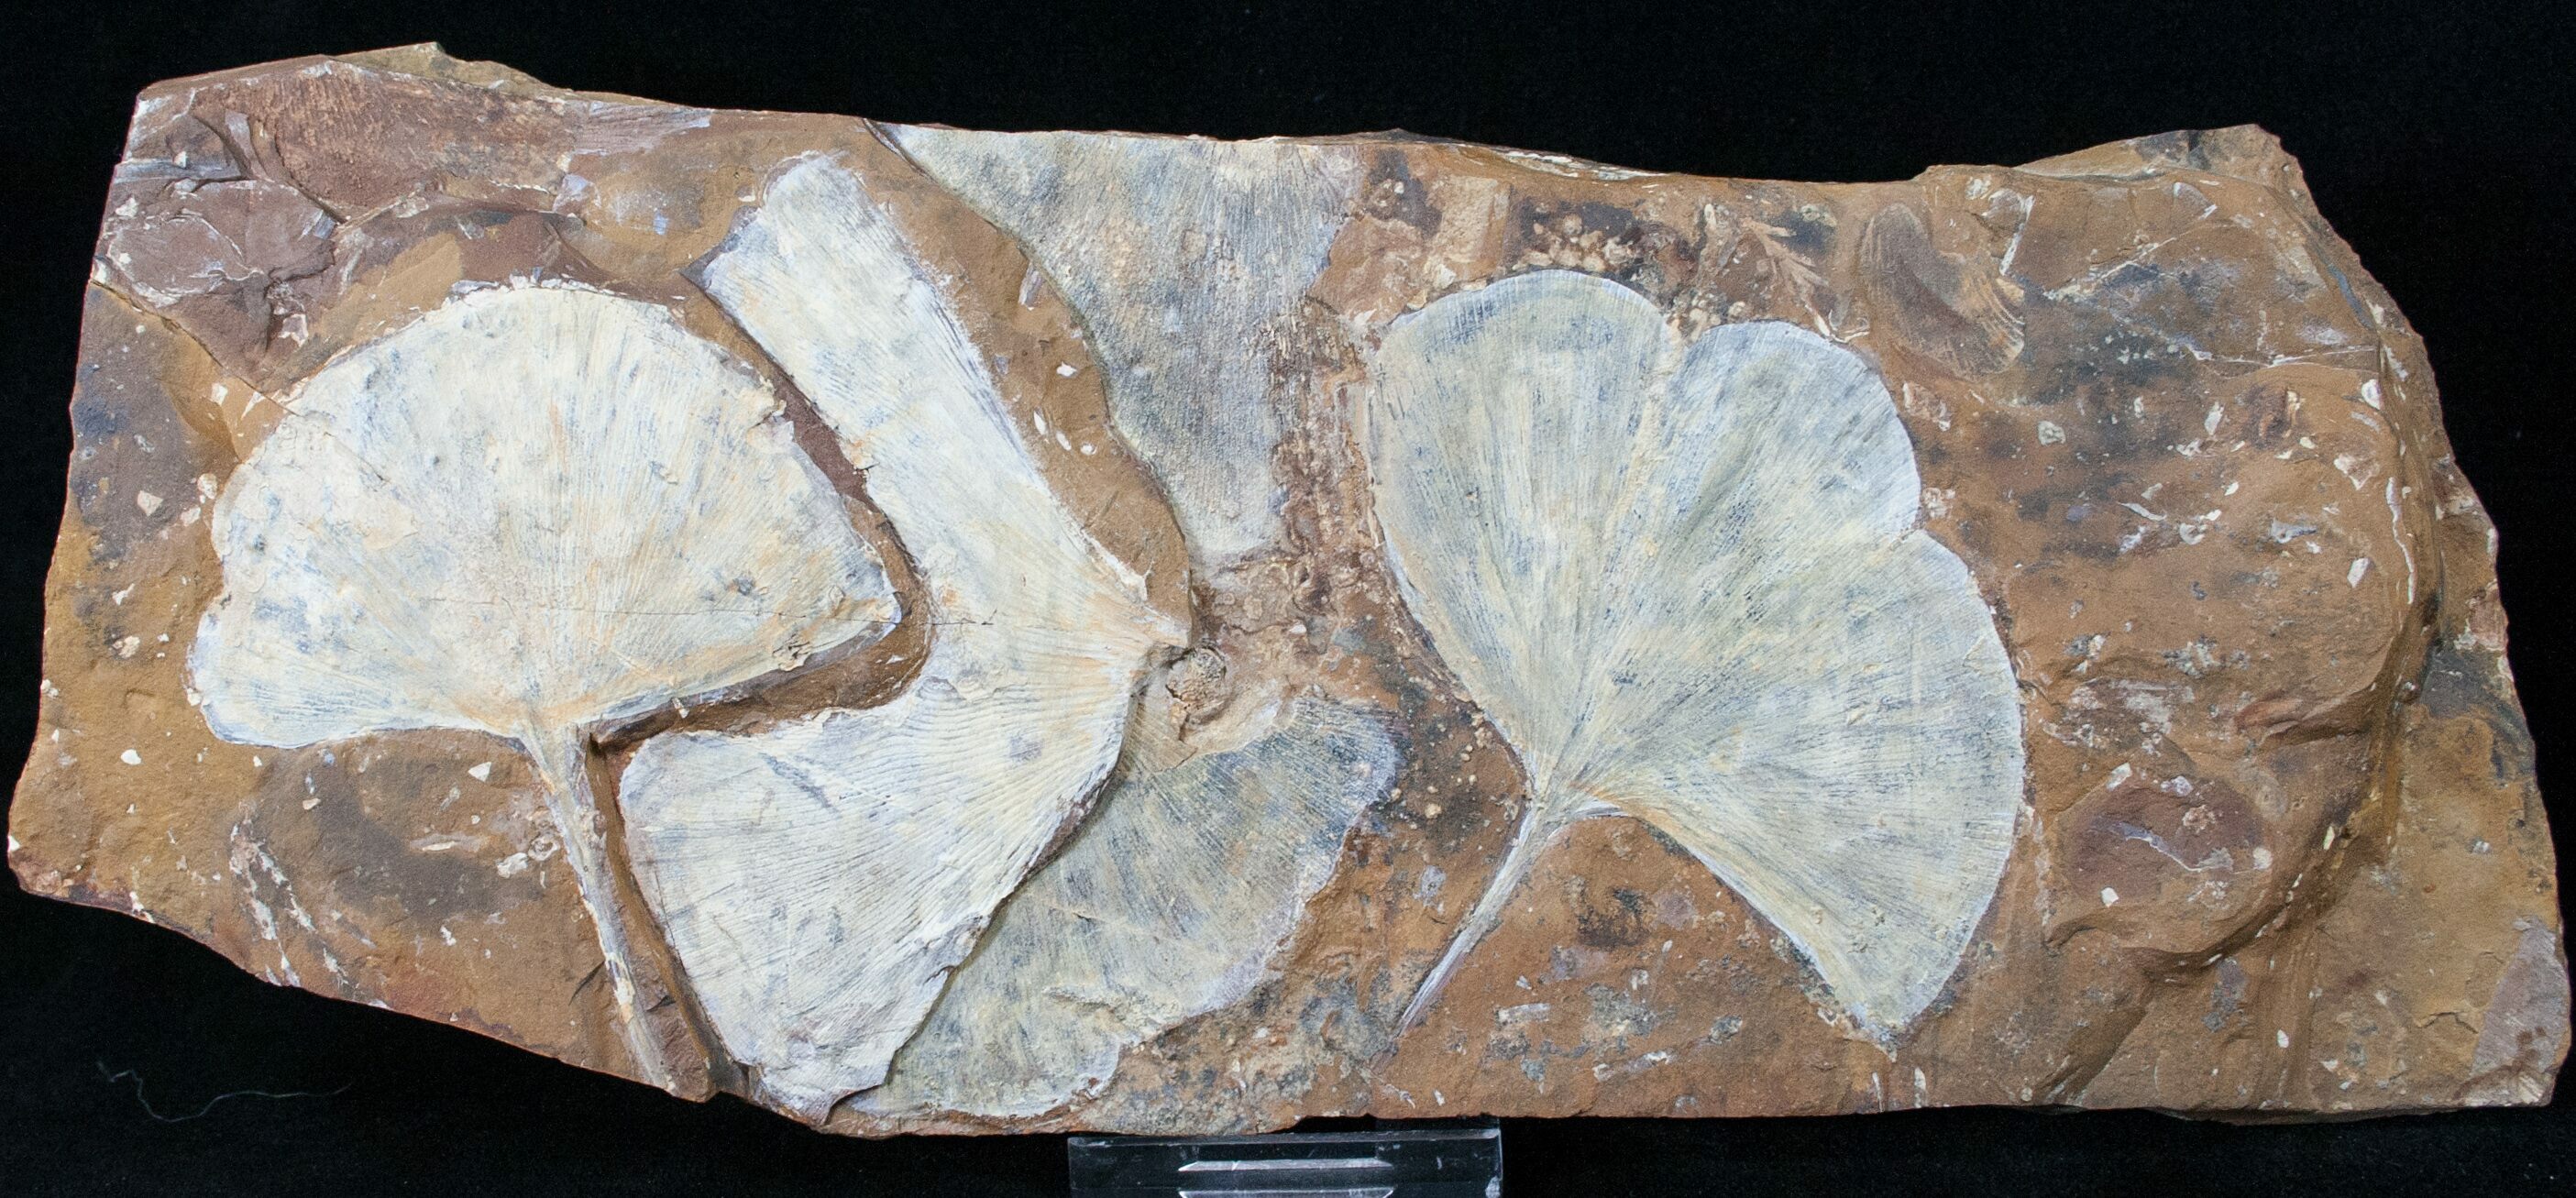 Spectacular Fossil Ginkgo Leaf Plate - North Dakota (Item #15818), Plant Fo...